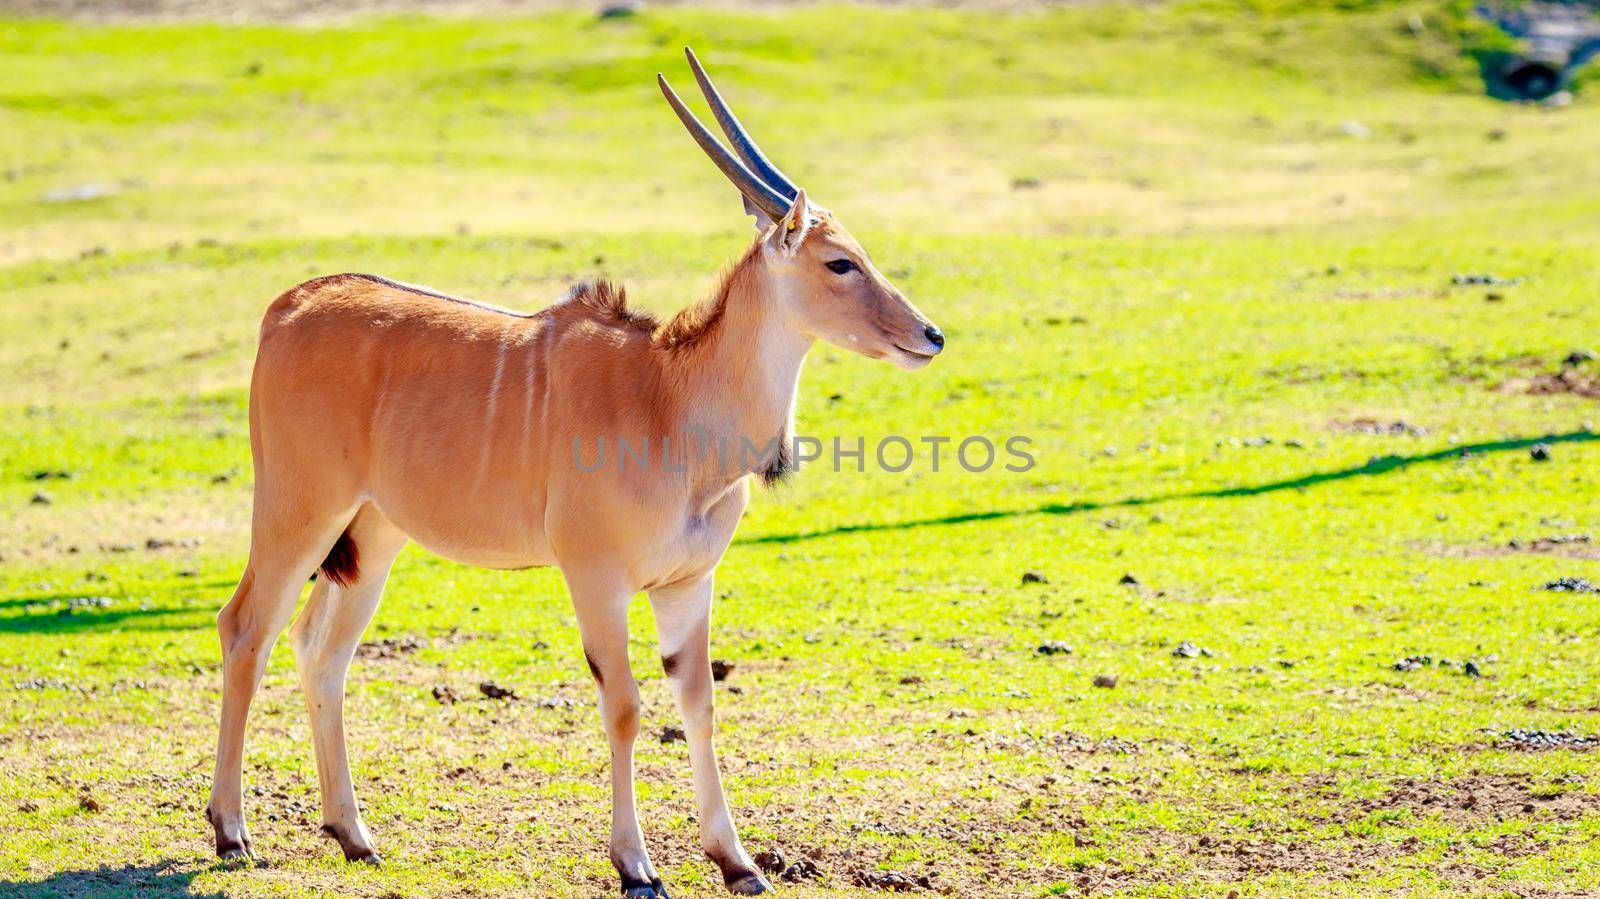 A female common eland antelope walking across the grassland.